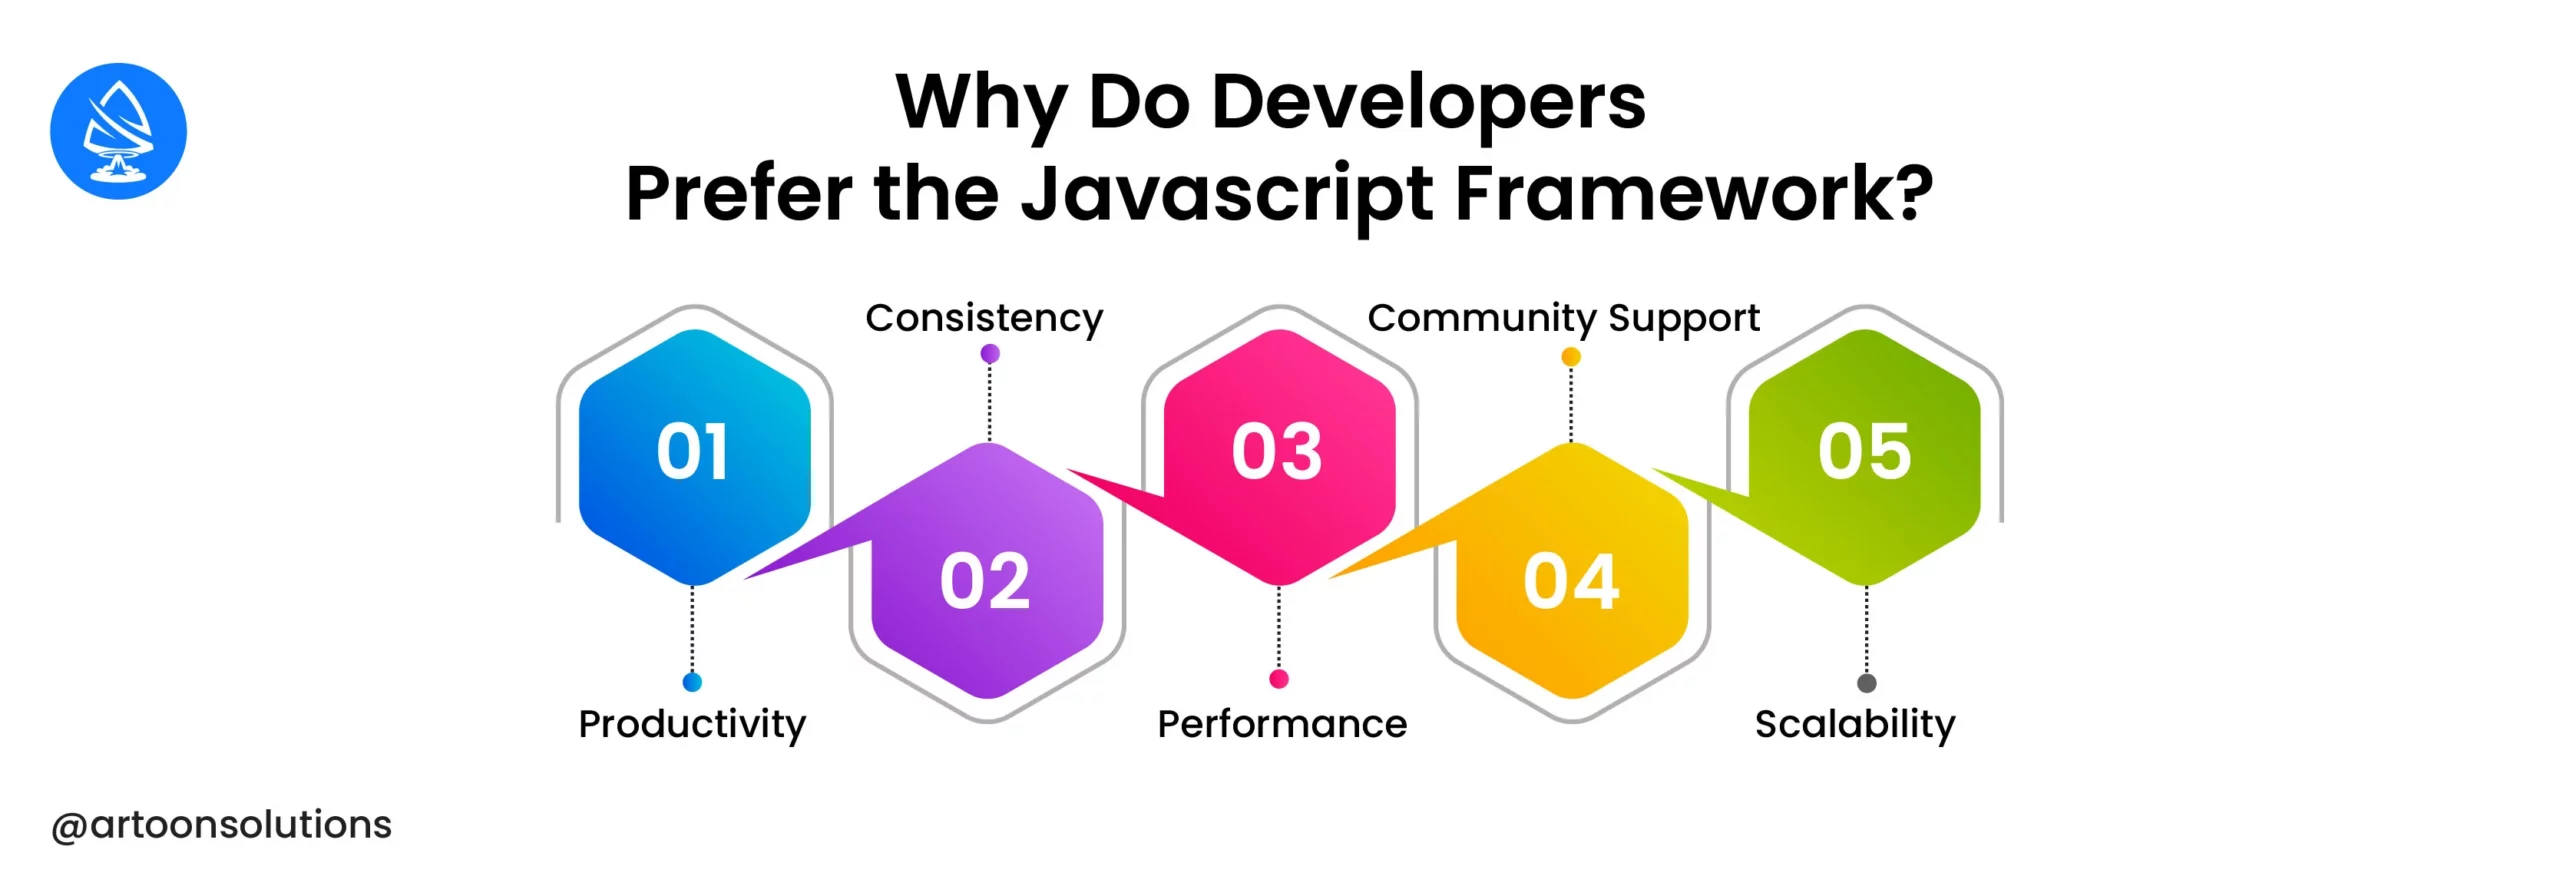 Why Do Developers Prefer the Javascript Framework?